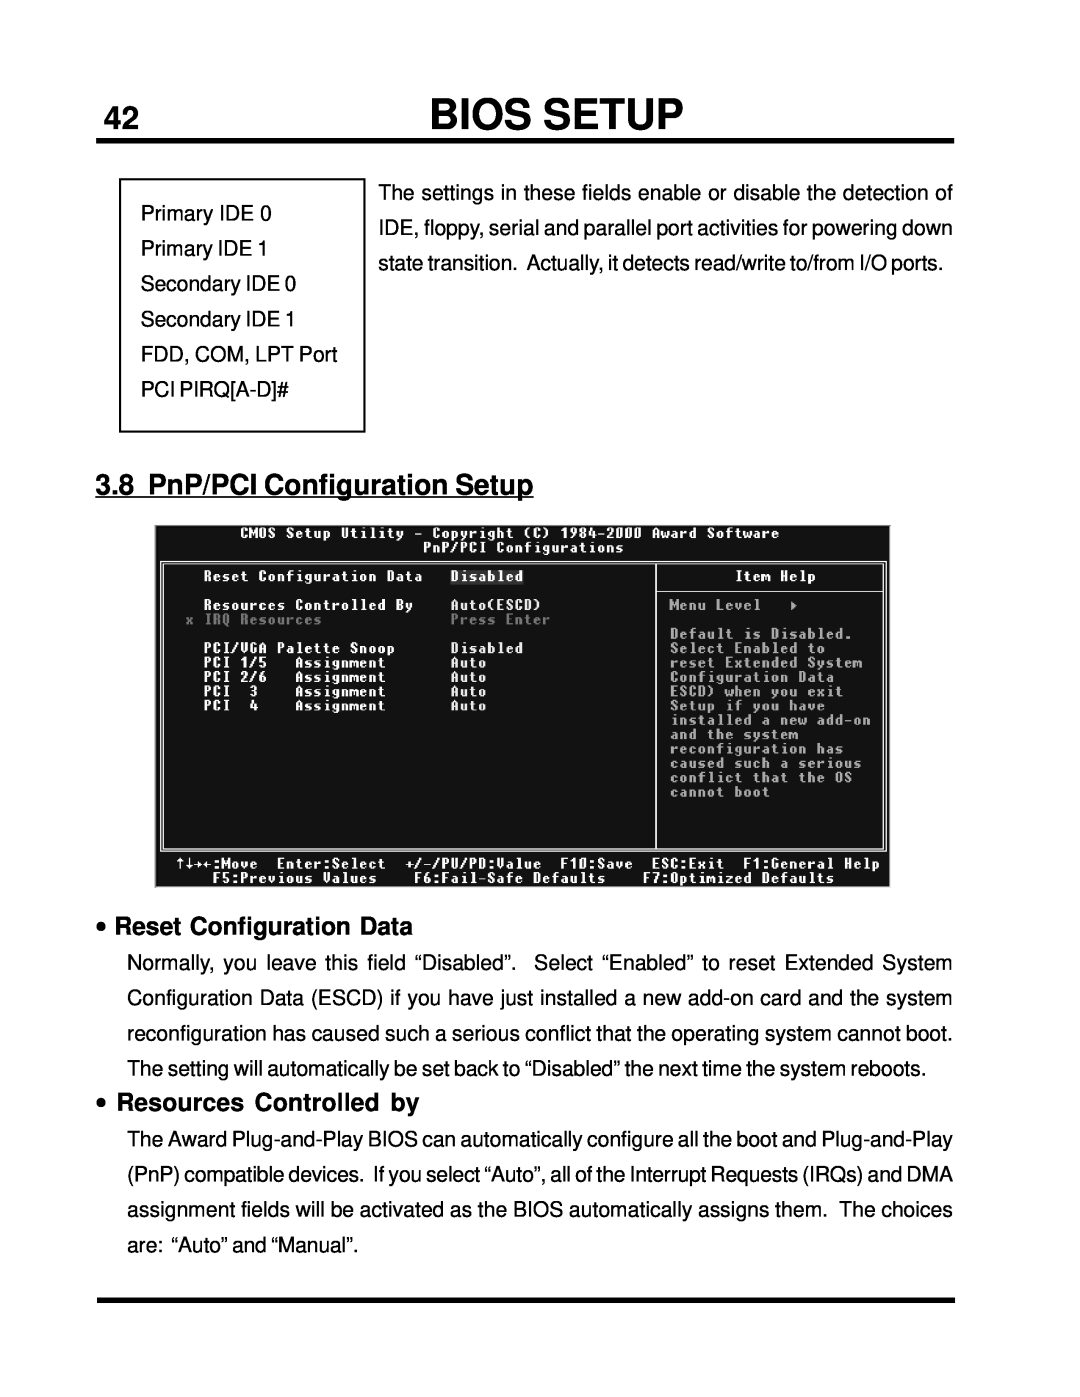 Intel TS-ASP3 user manual 3.8 PnP/PCI Configuration Setup, •Reset Configuration Data, •Resources Controlled by, Bios Setup 